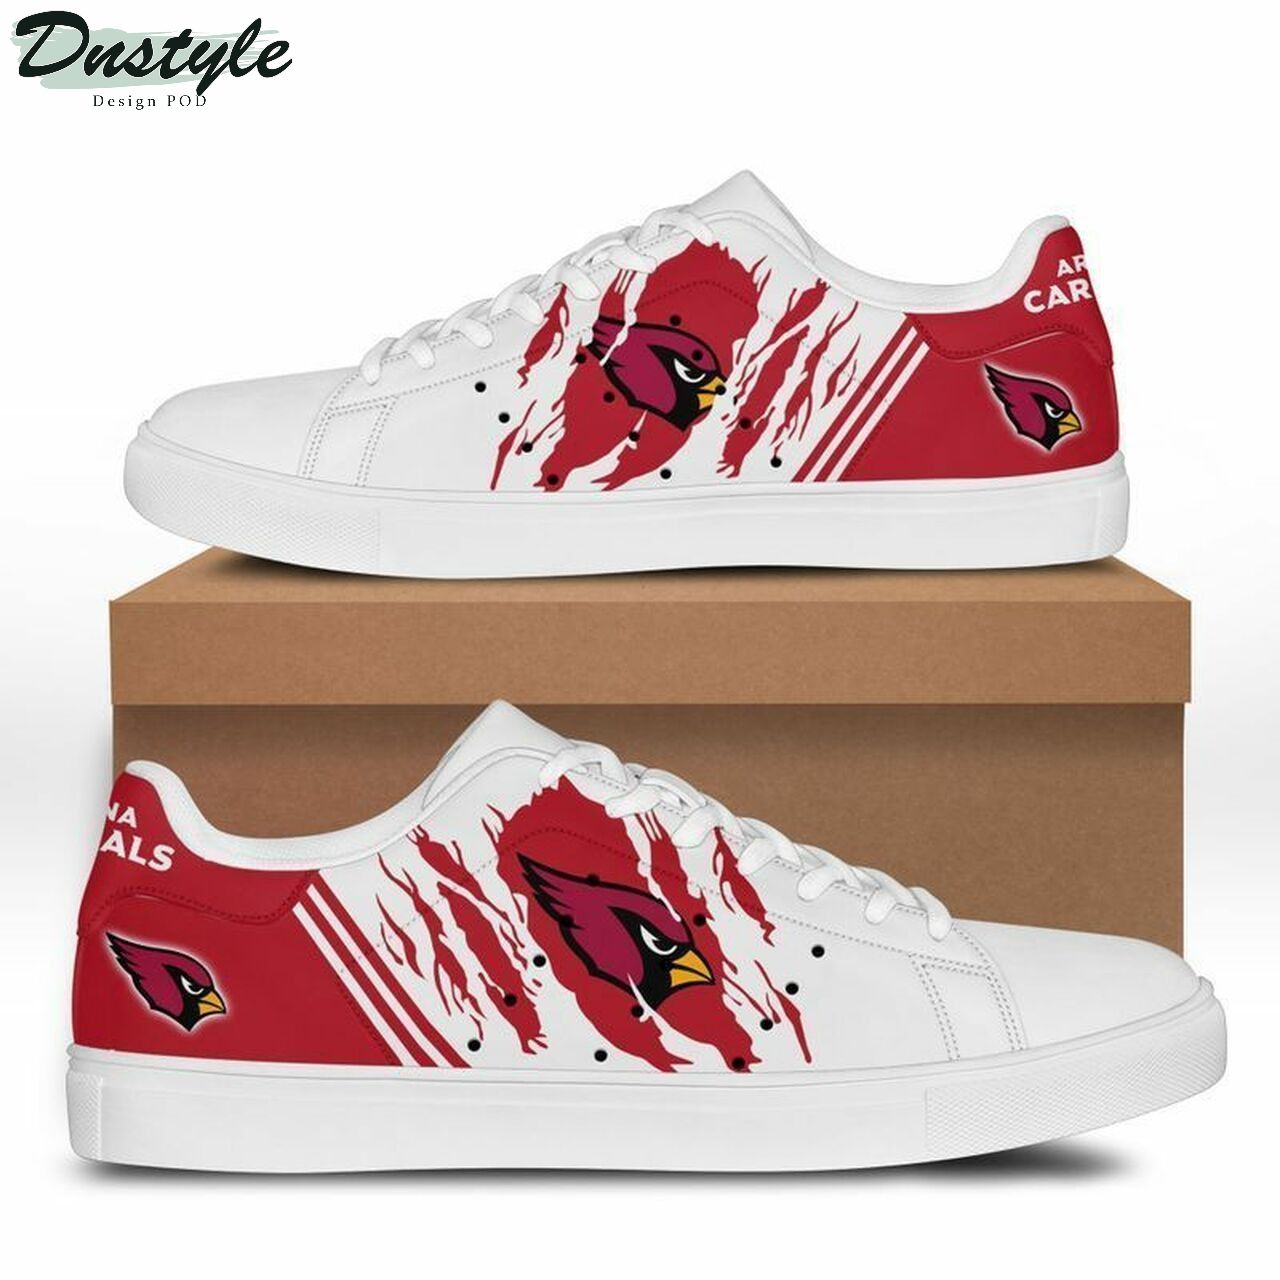 Arizona Cardinals 8 NFL stan smith low top skate shoes